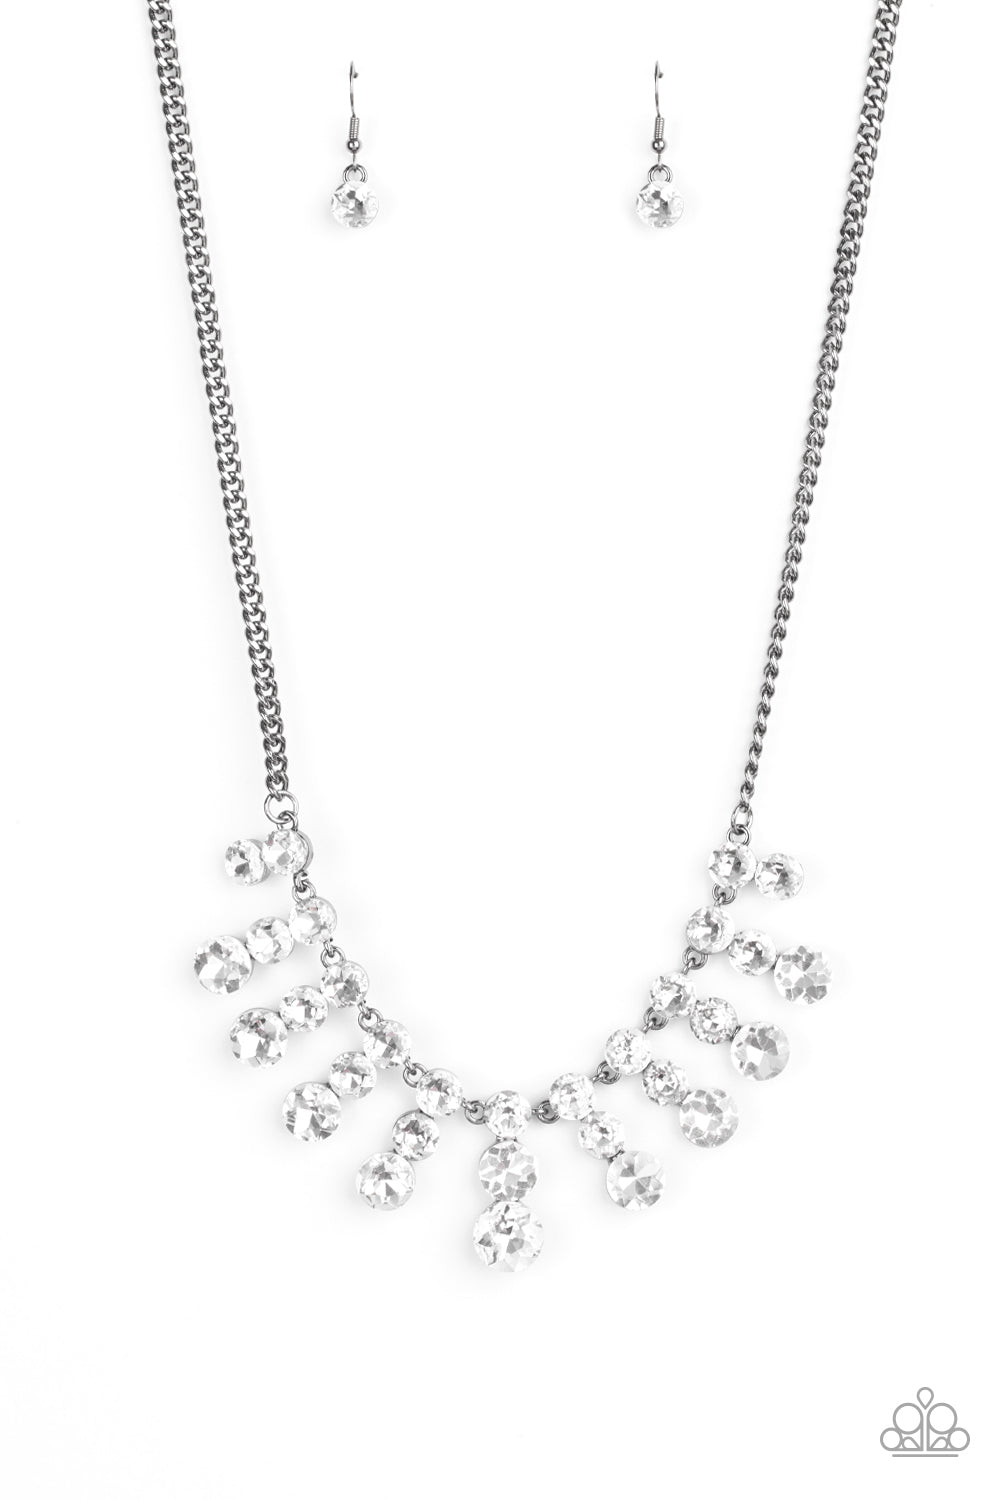 Celebrity Couture Gunmetal Black &amp; White Rhinestone Necklace - Paparazzi Accessories- lightbox - CarasShop.com - $5 Jewelry by Cara Jewels